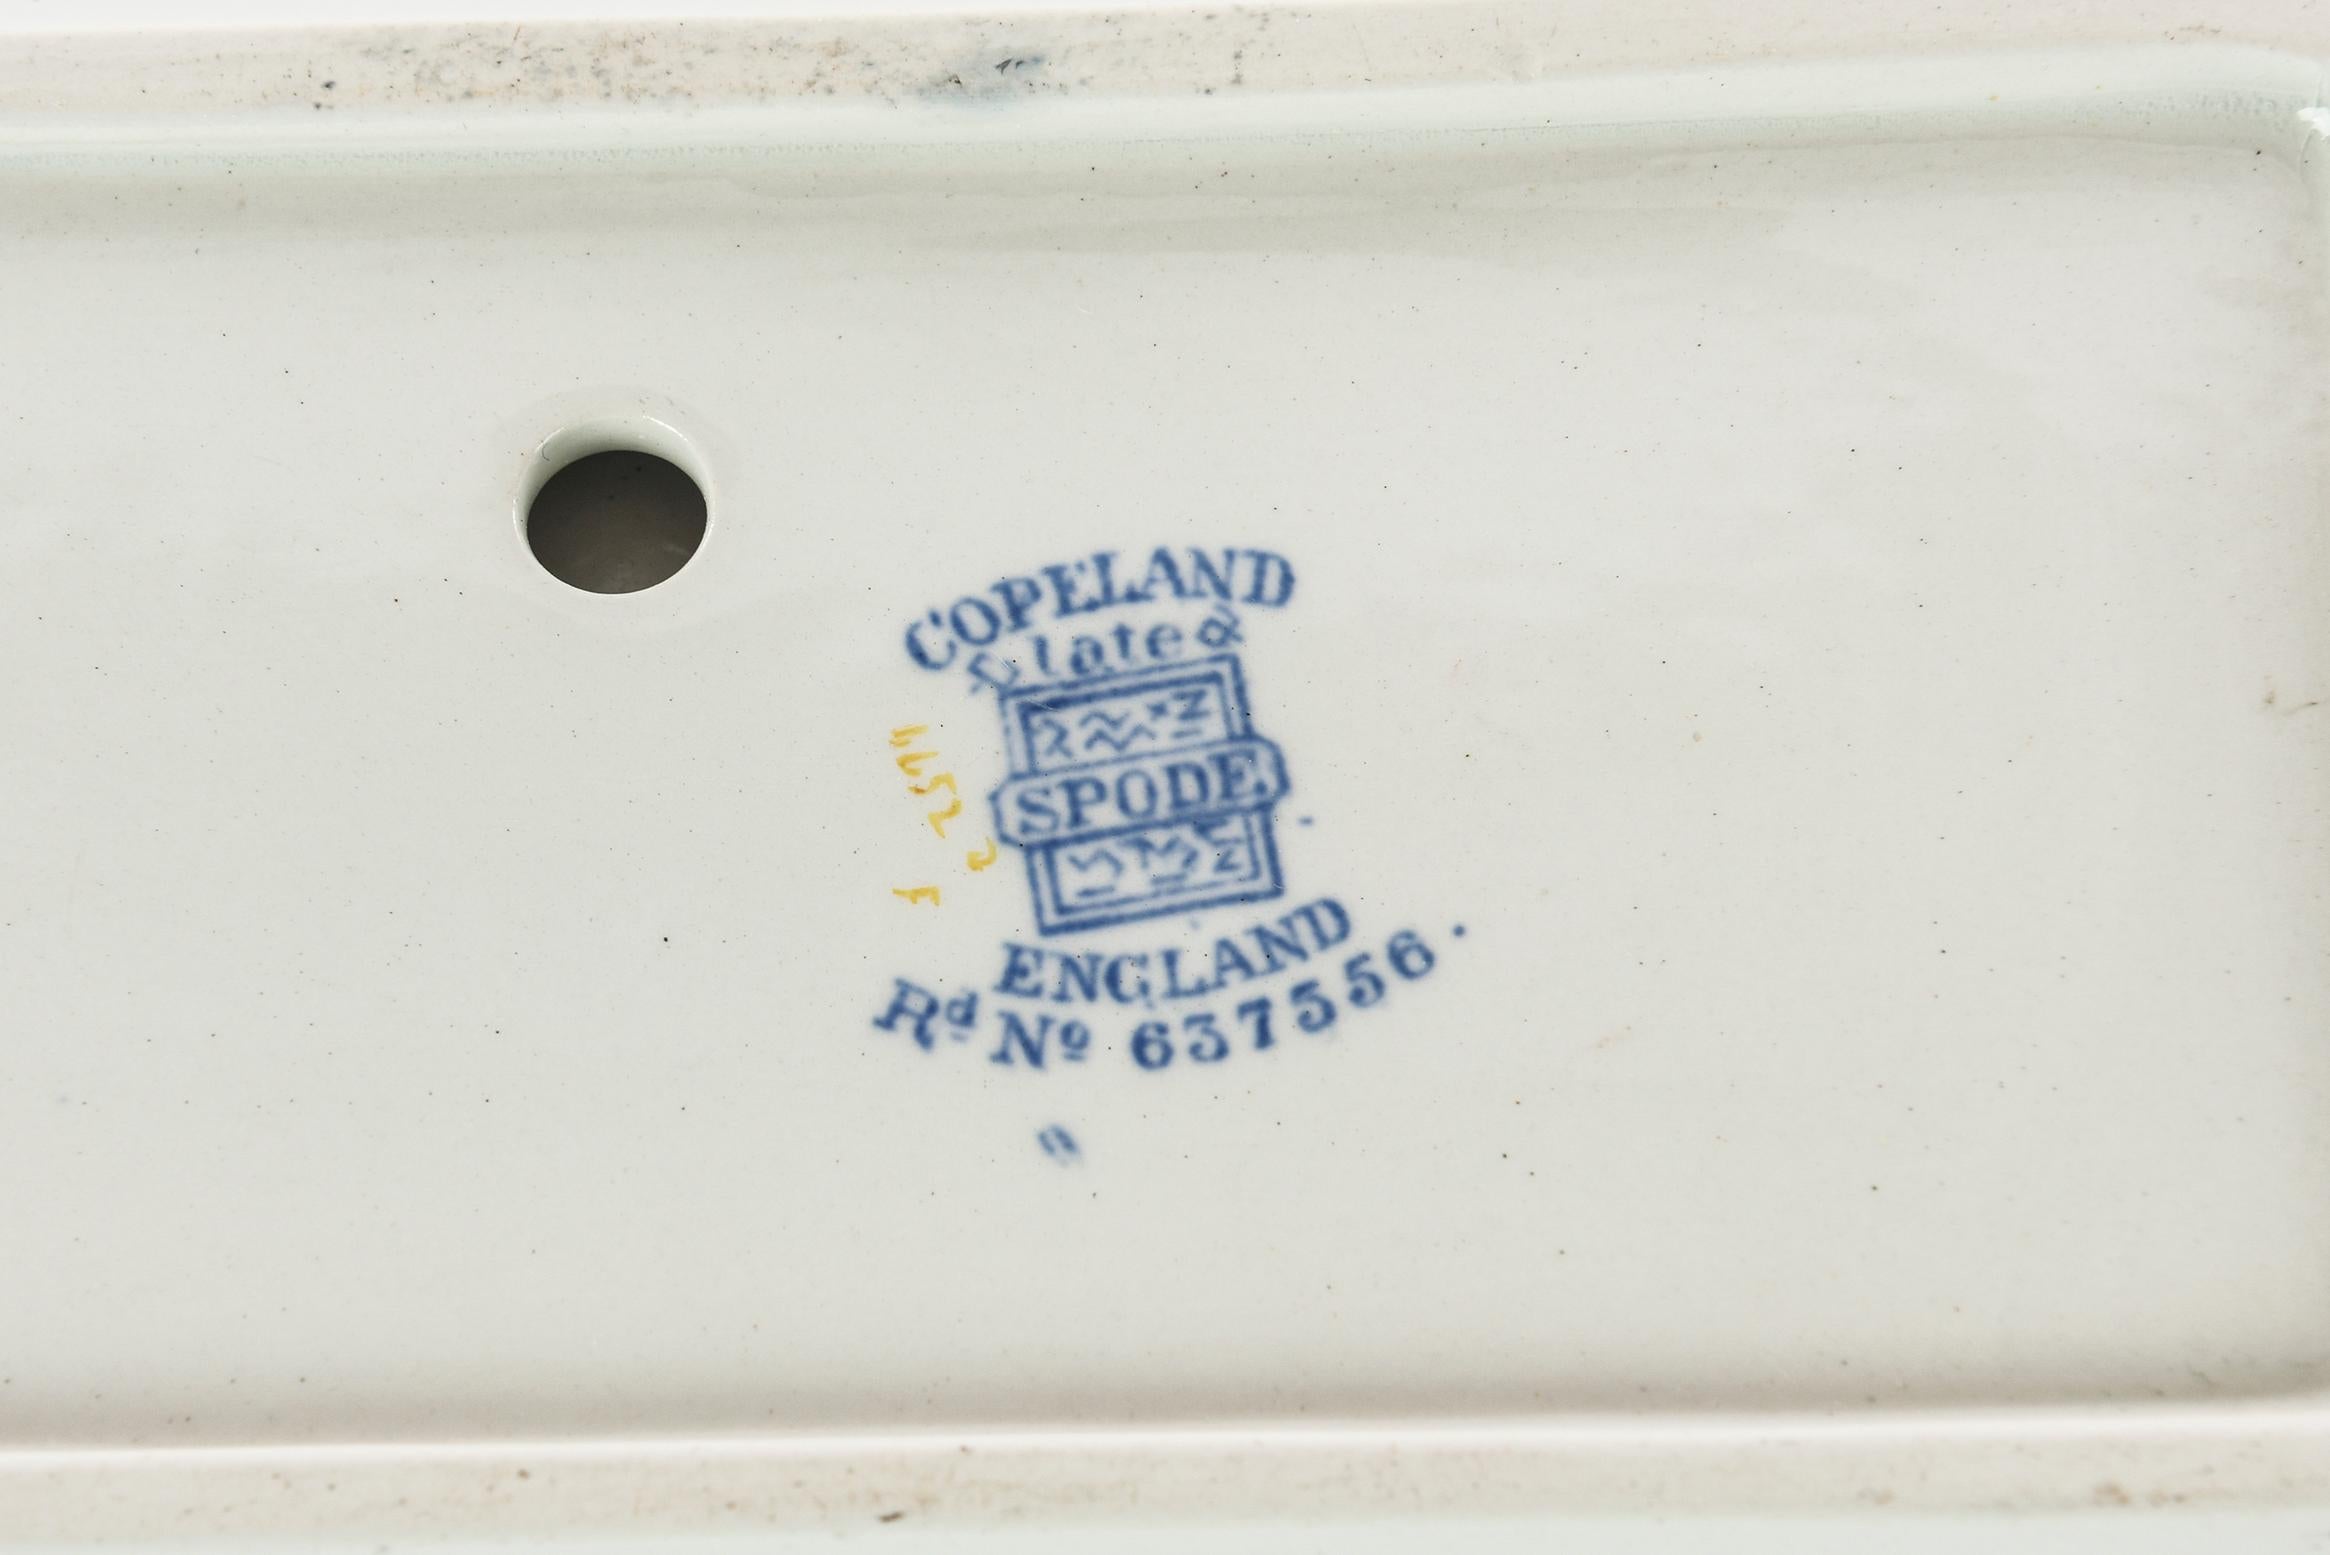 British Antique English Porcelain Inkwell, Blue Pheasant Design by Copeland Spode